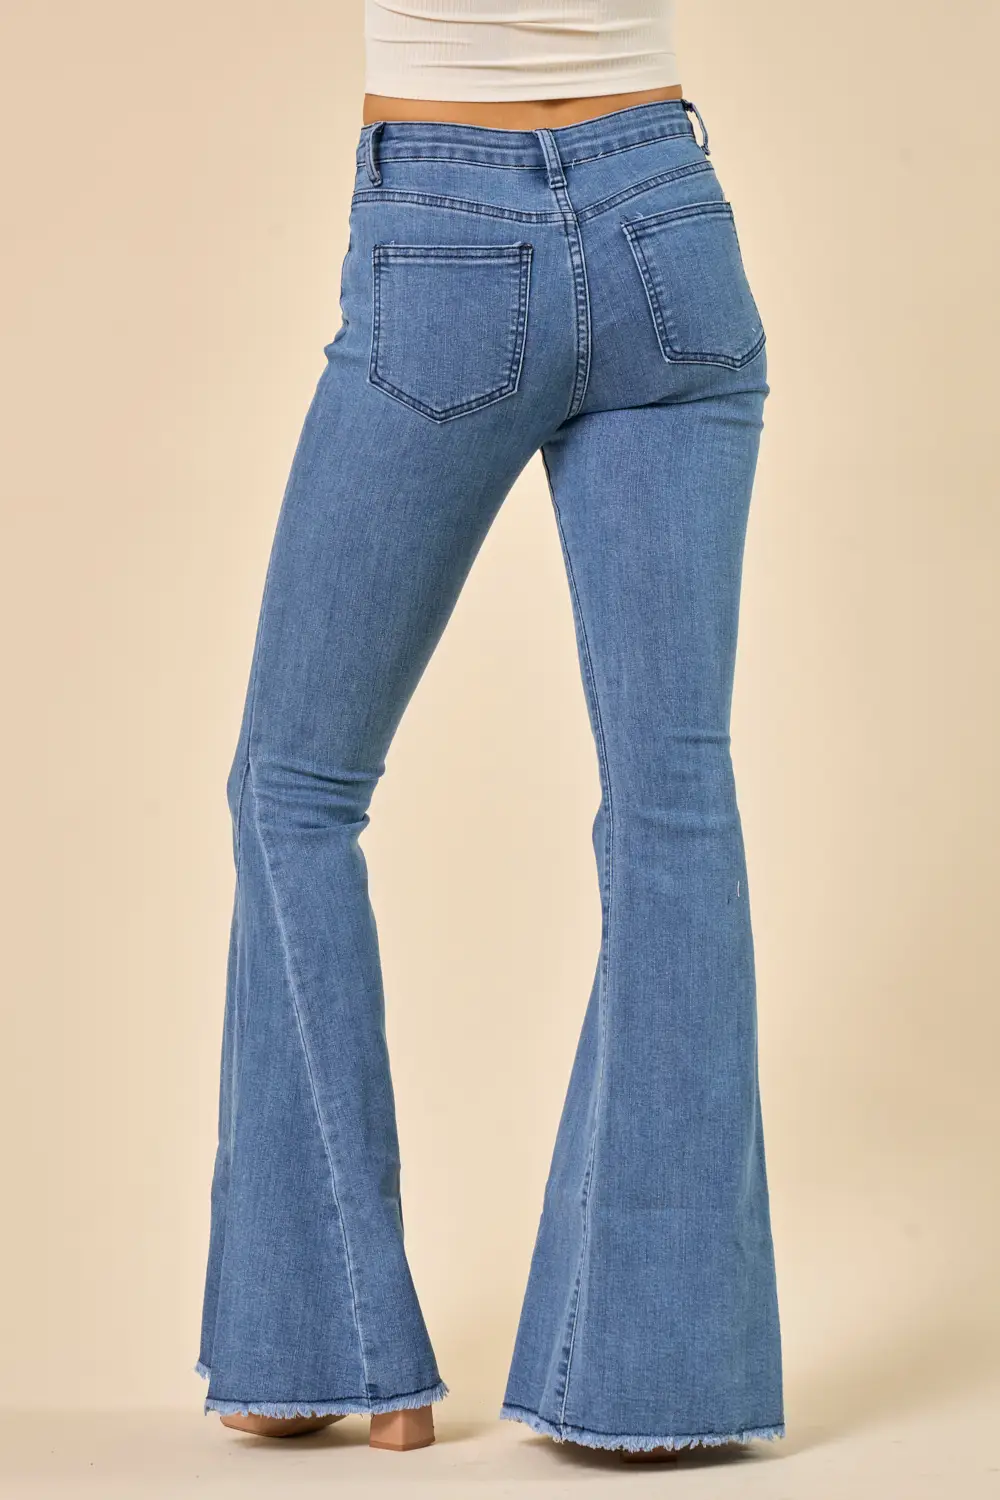 Tiffany Jeans - WISTERIA LANE